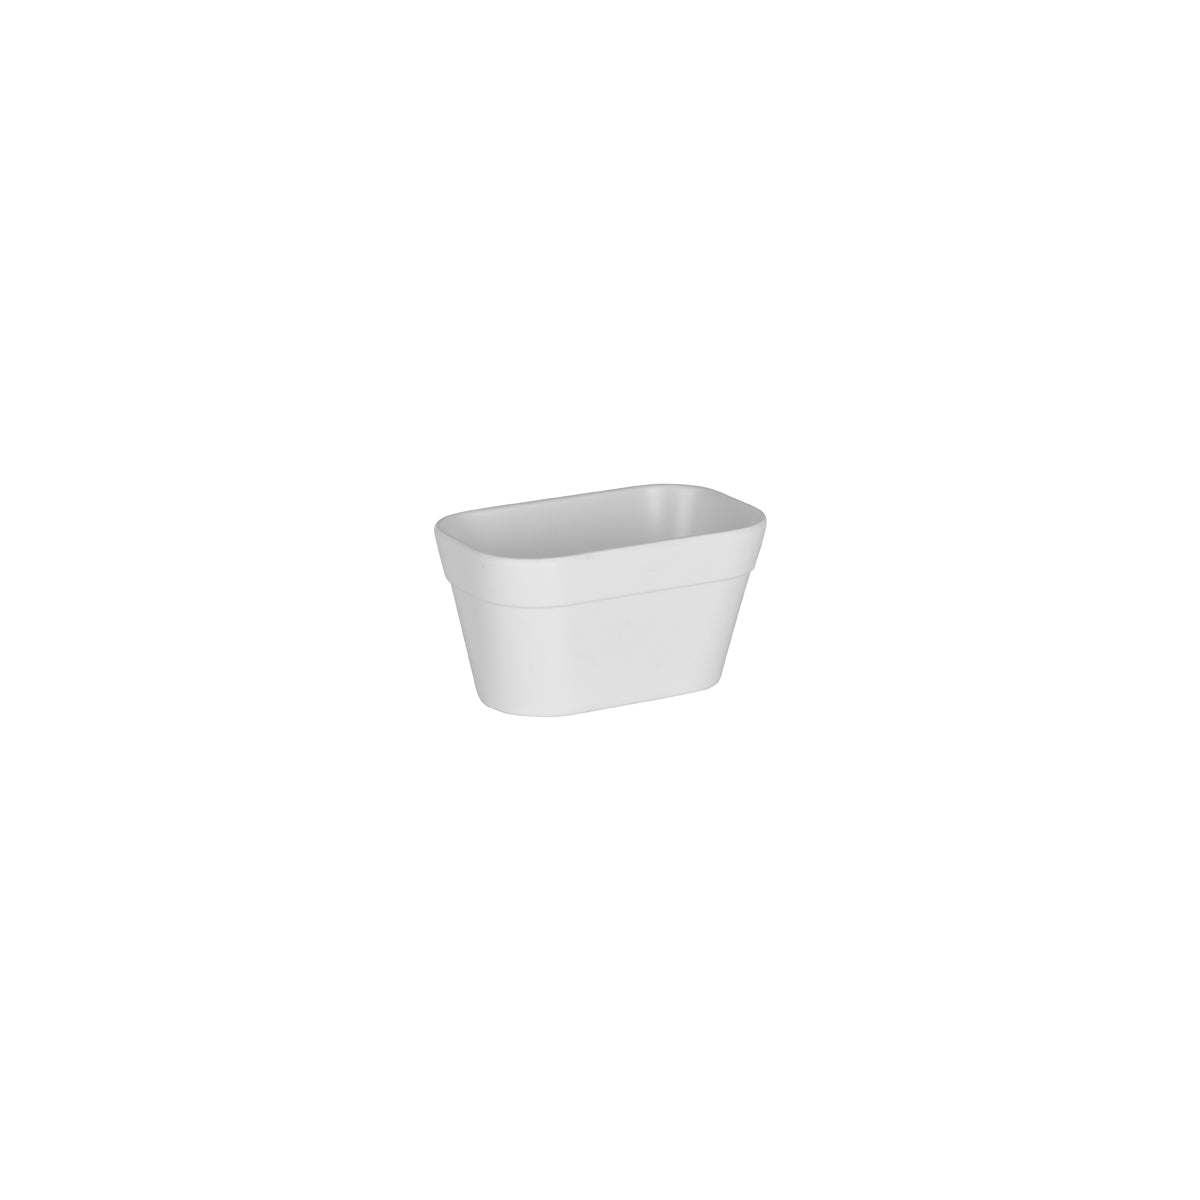 46385 Zicco Bento Box White Insert Bowl Solid Small Tomkin Australia Hospitality Supplies